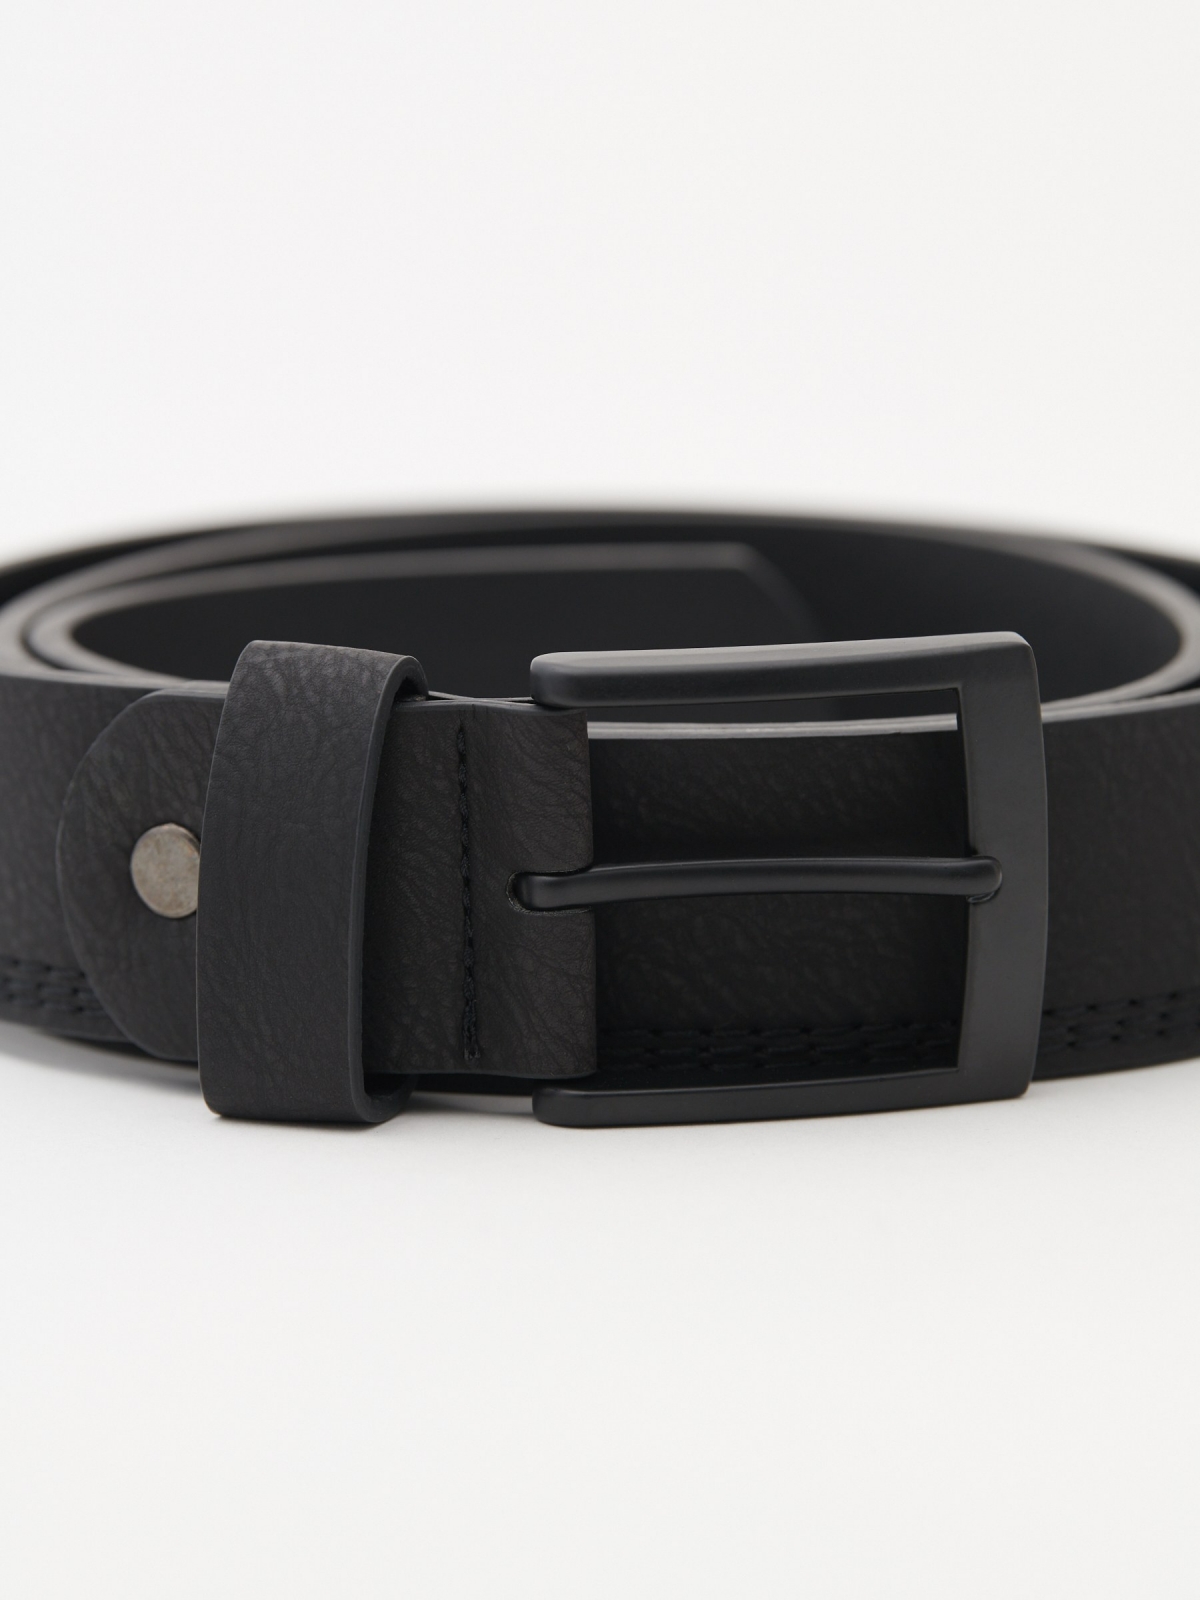 Stitching leather effect belt black vista enrollado